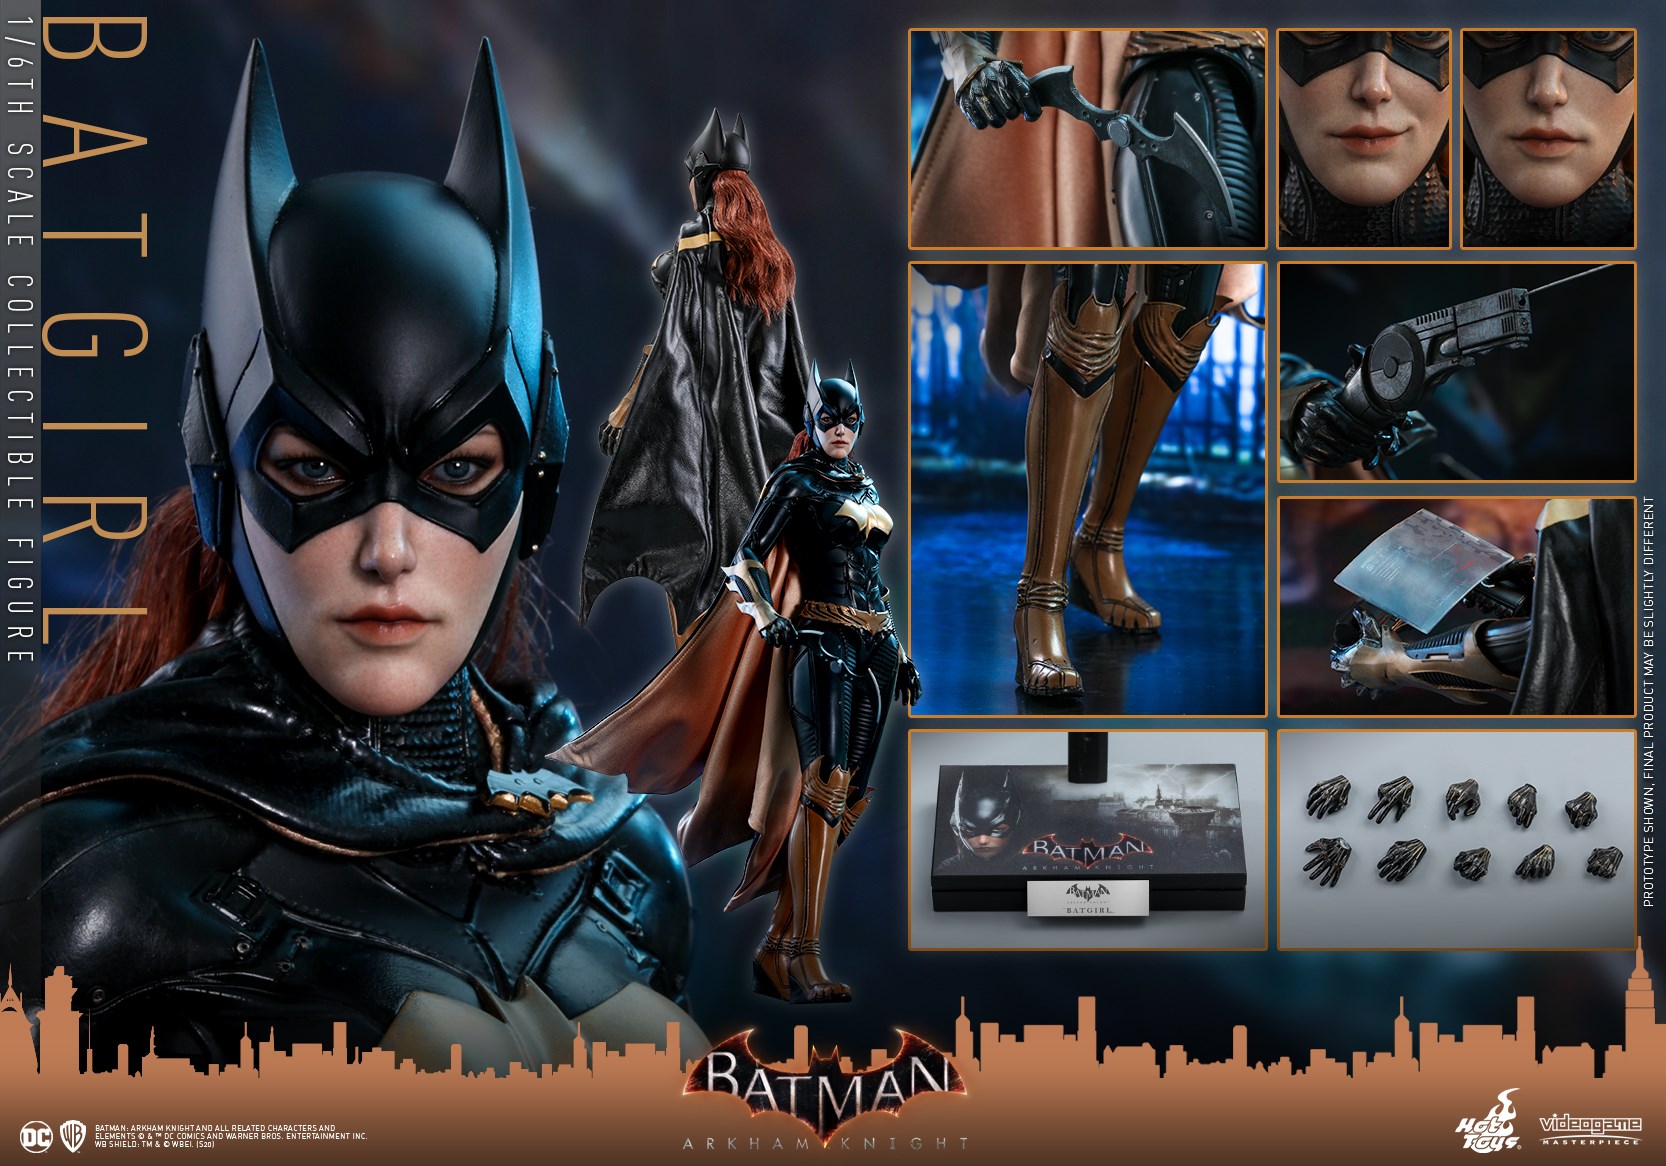 Hot Toys - VGM40 - Batman: Arkham Knight - Batgirl